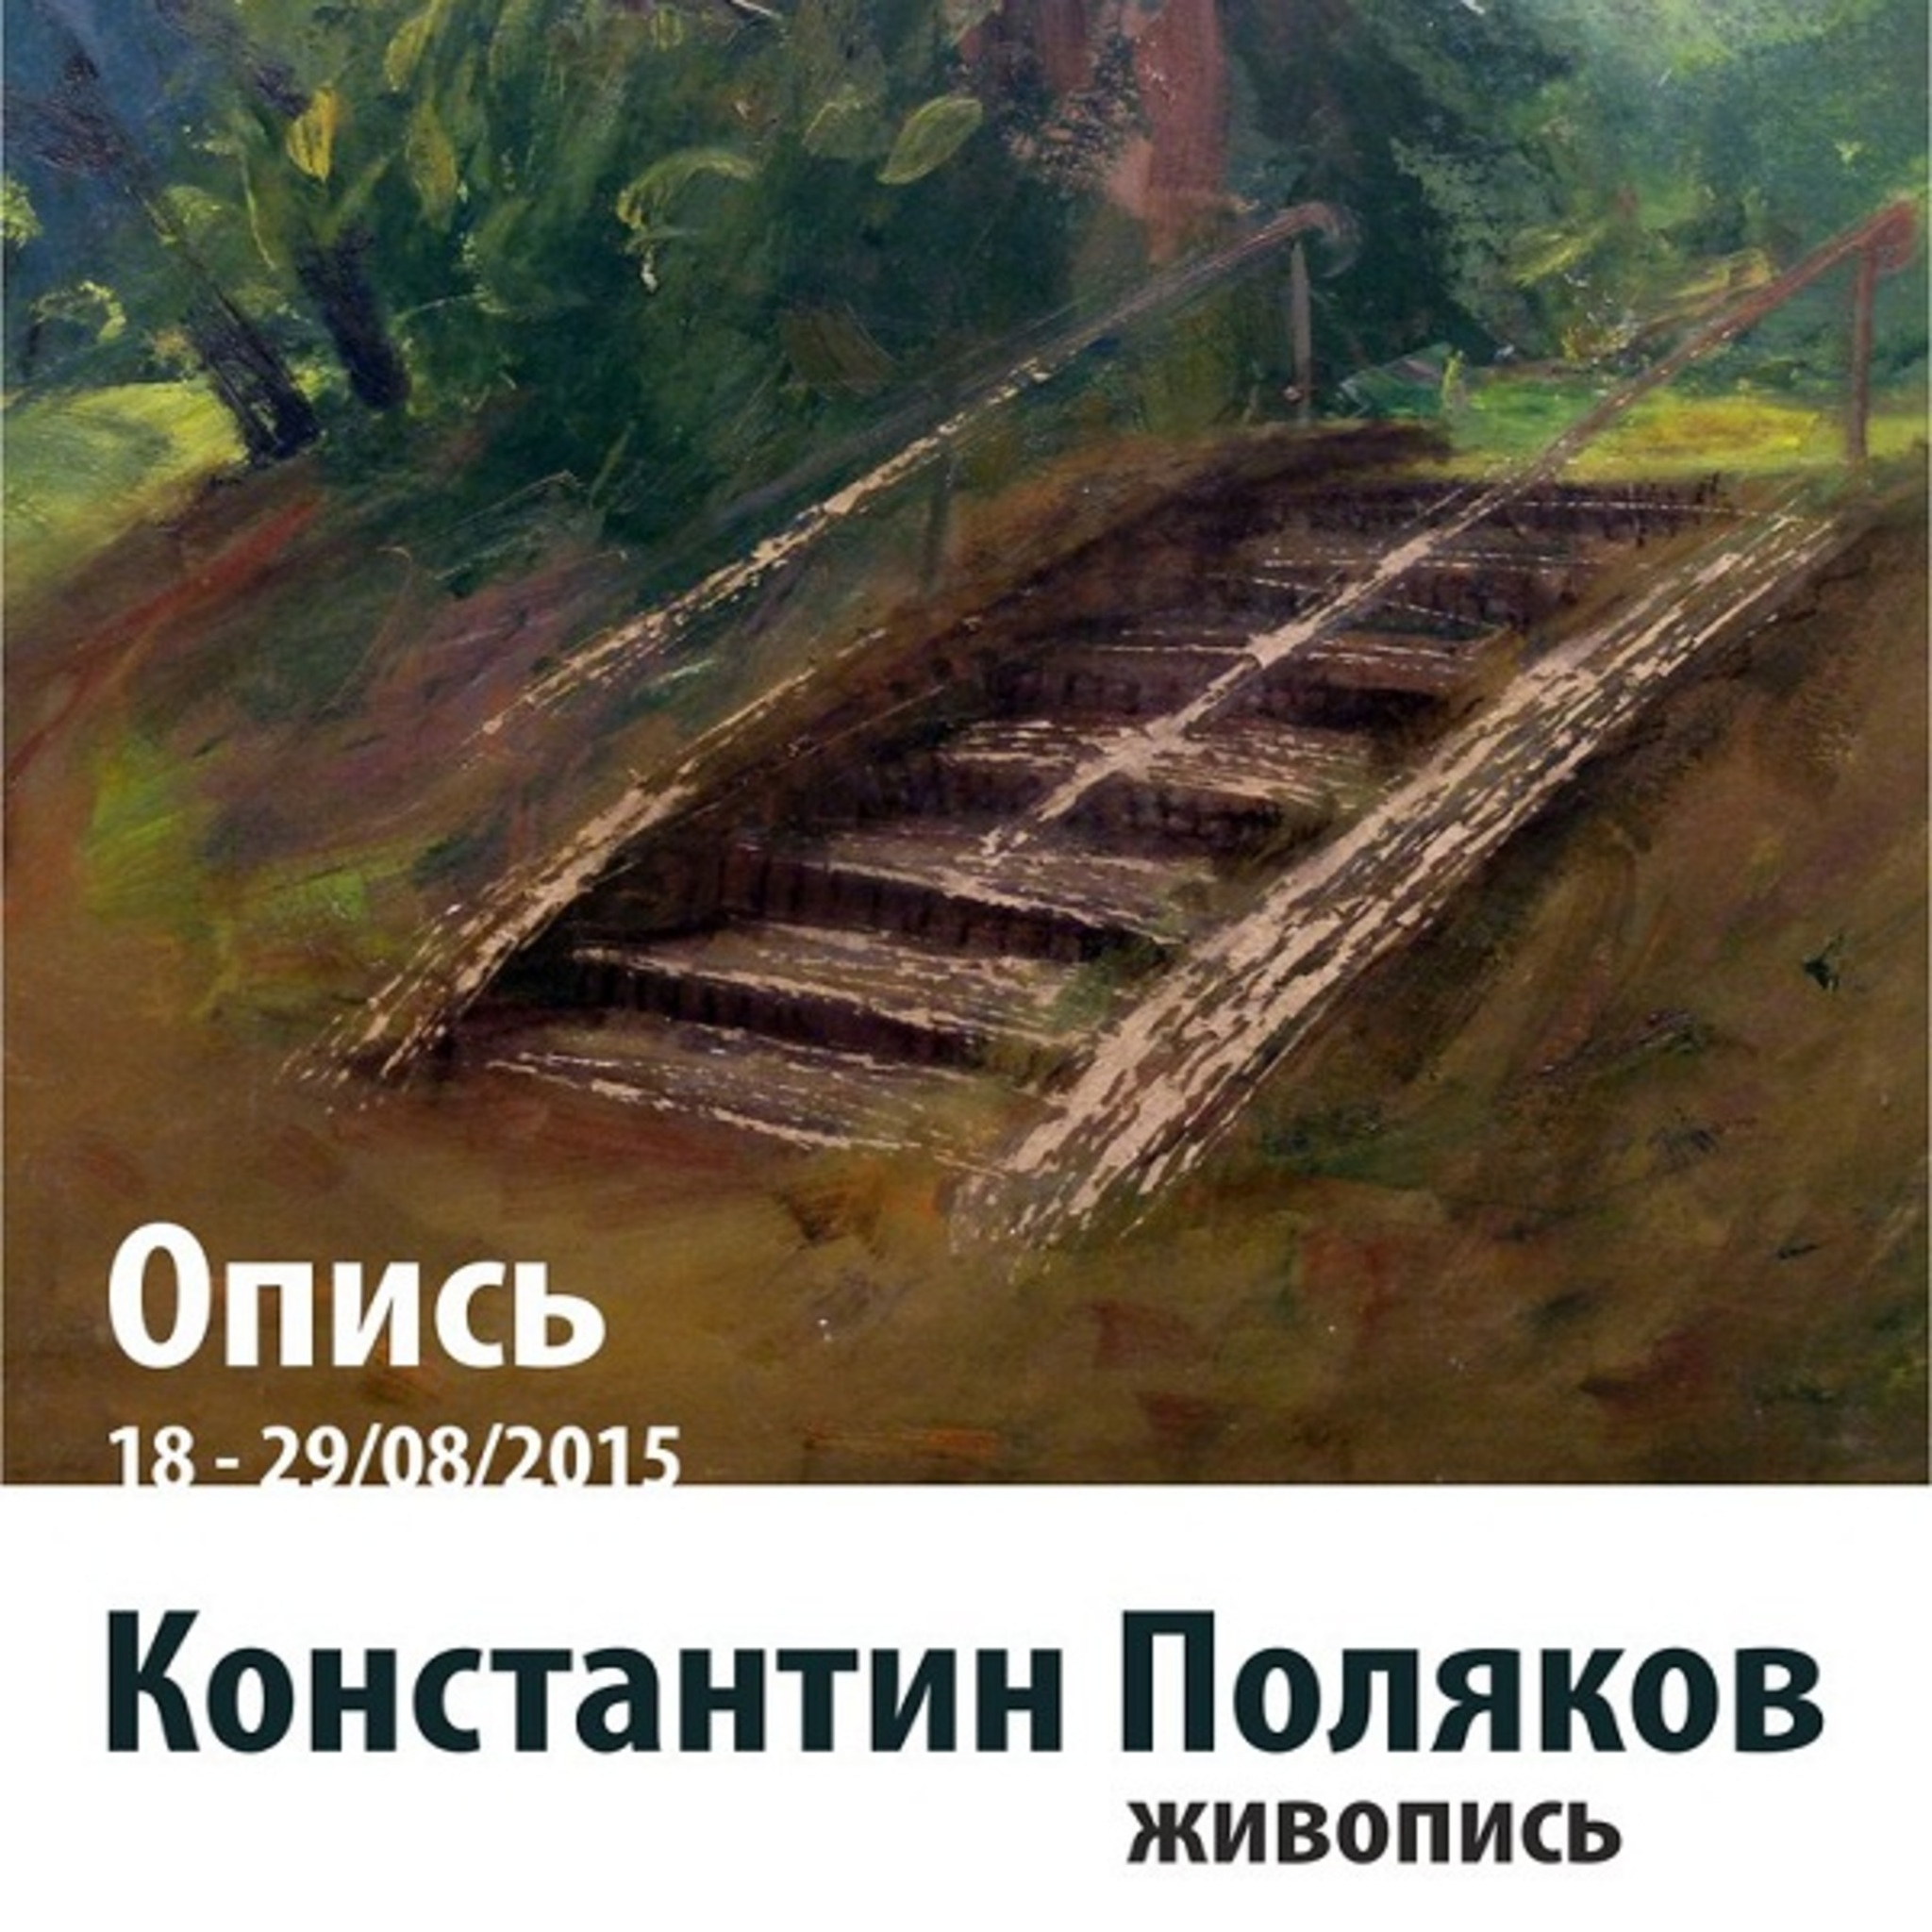 Exhibition Konstantin Polyakov Inventory